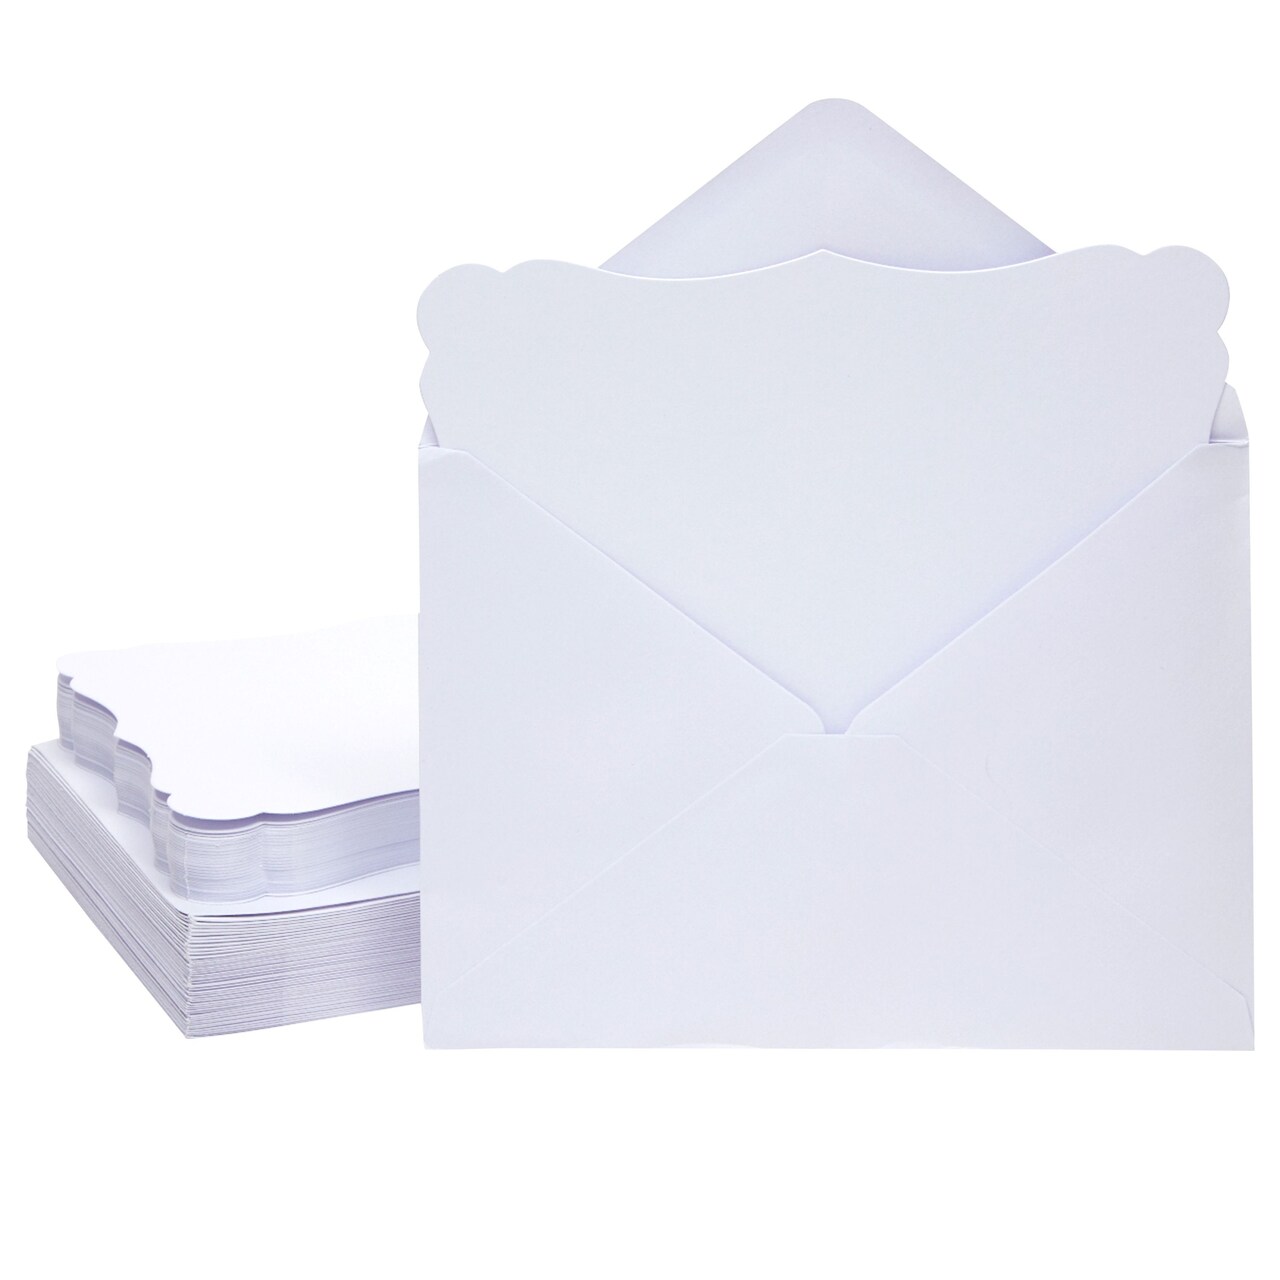 50 Pack Blank Invitations with Envelopes, Printable DIY Greeting